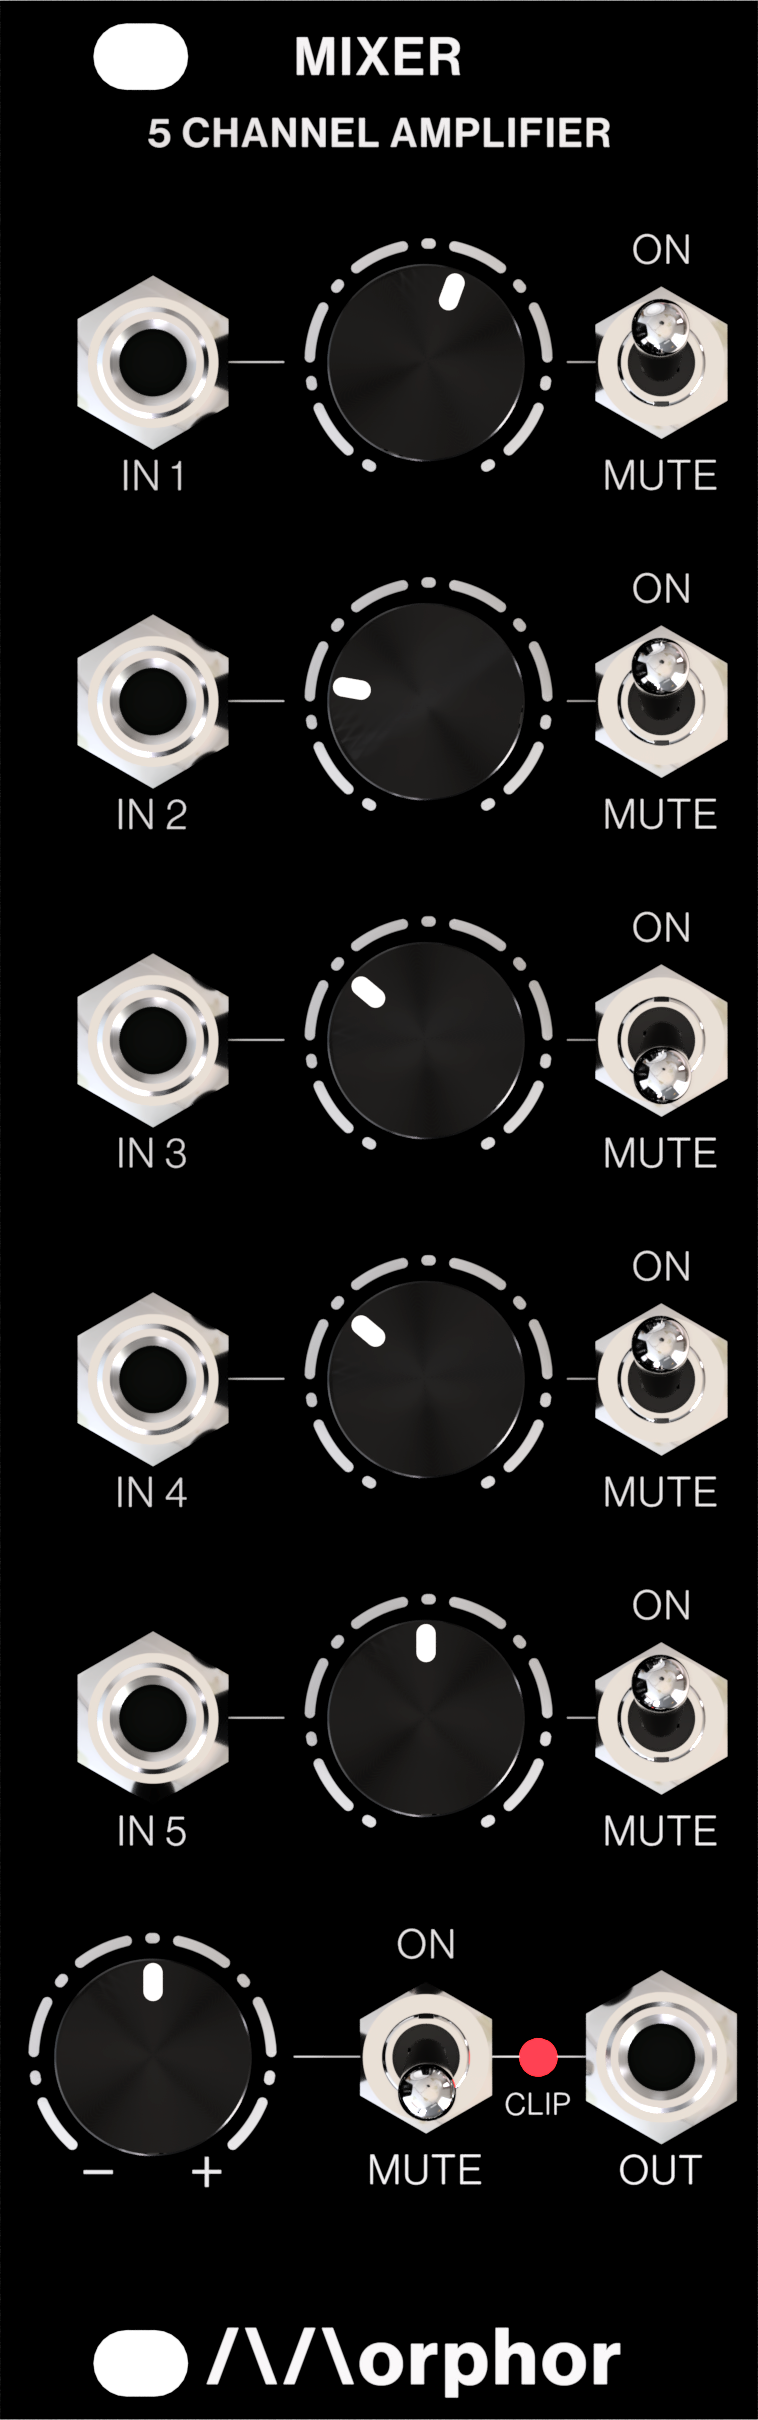 Mixer - 5 Channel Amplifier